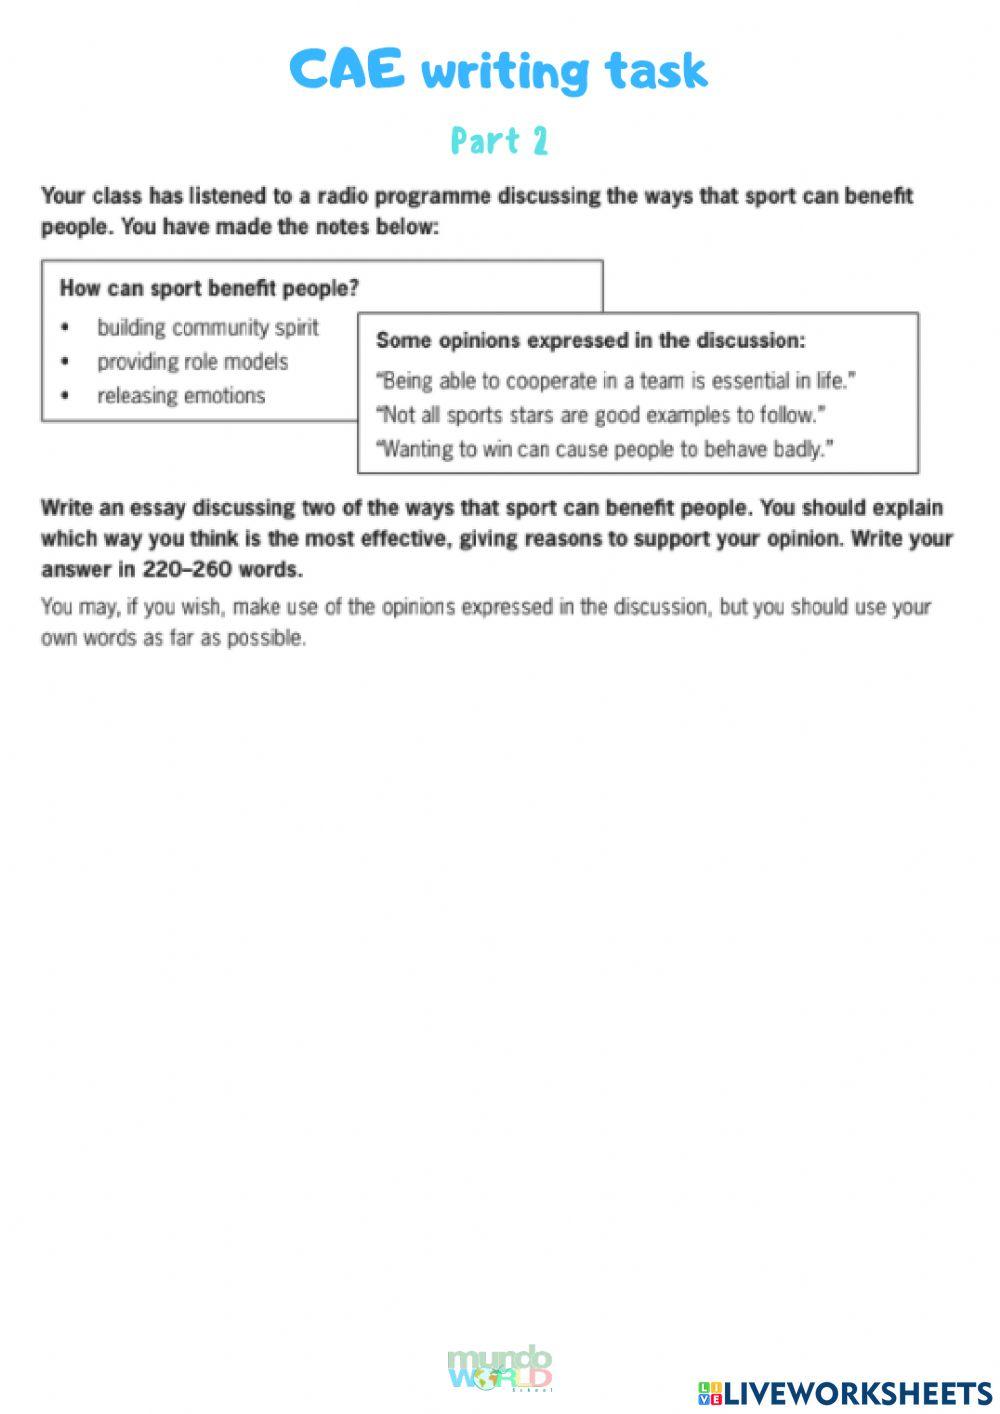 CAE Writing Part 2 worksheet | Live Worksheets